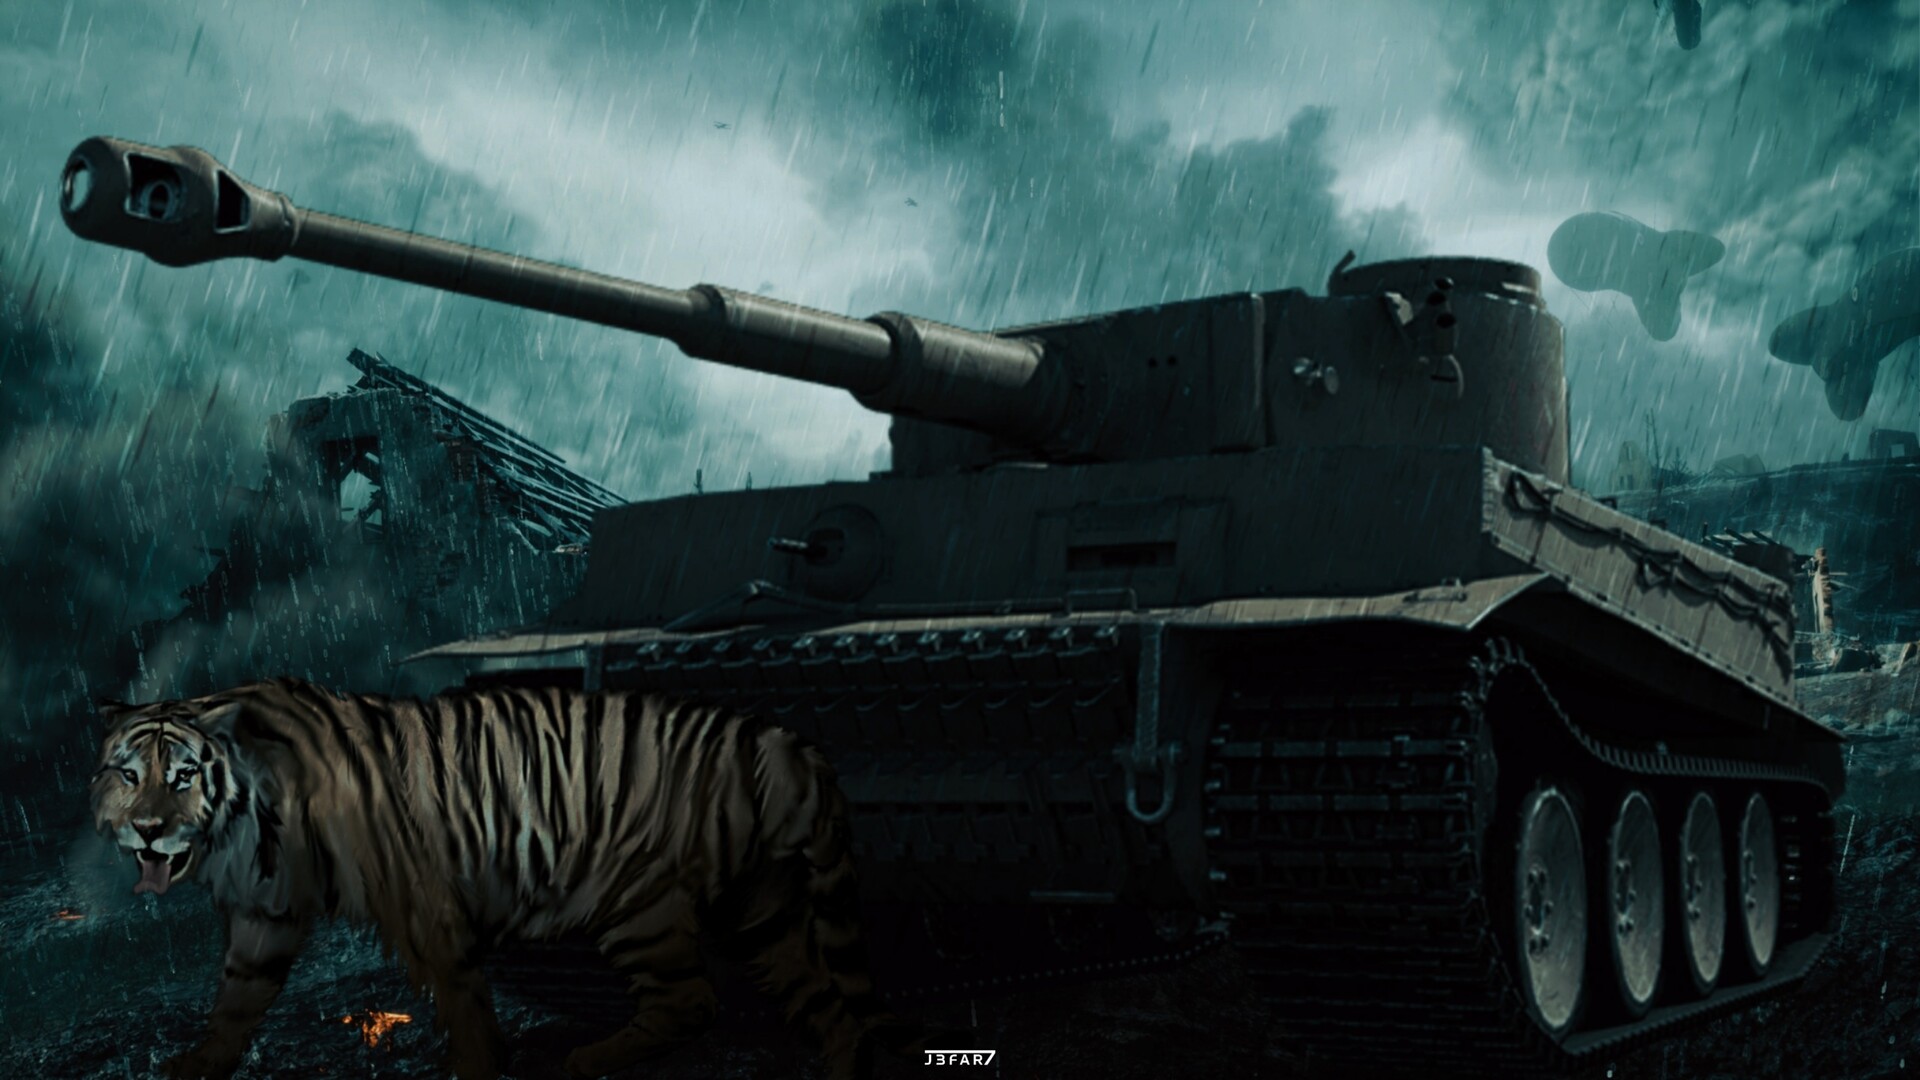 Battlefield 5 poster with tanks | HD 1920x1080 desktop wallpapers, 4K image  3840x2160